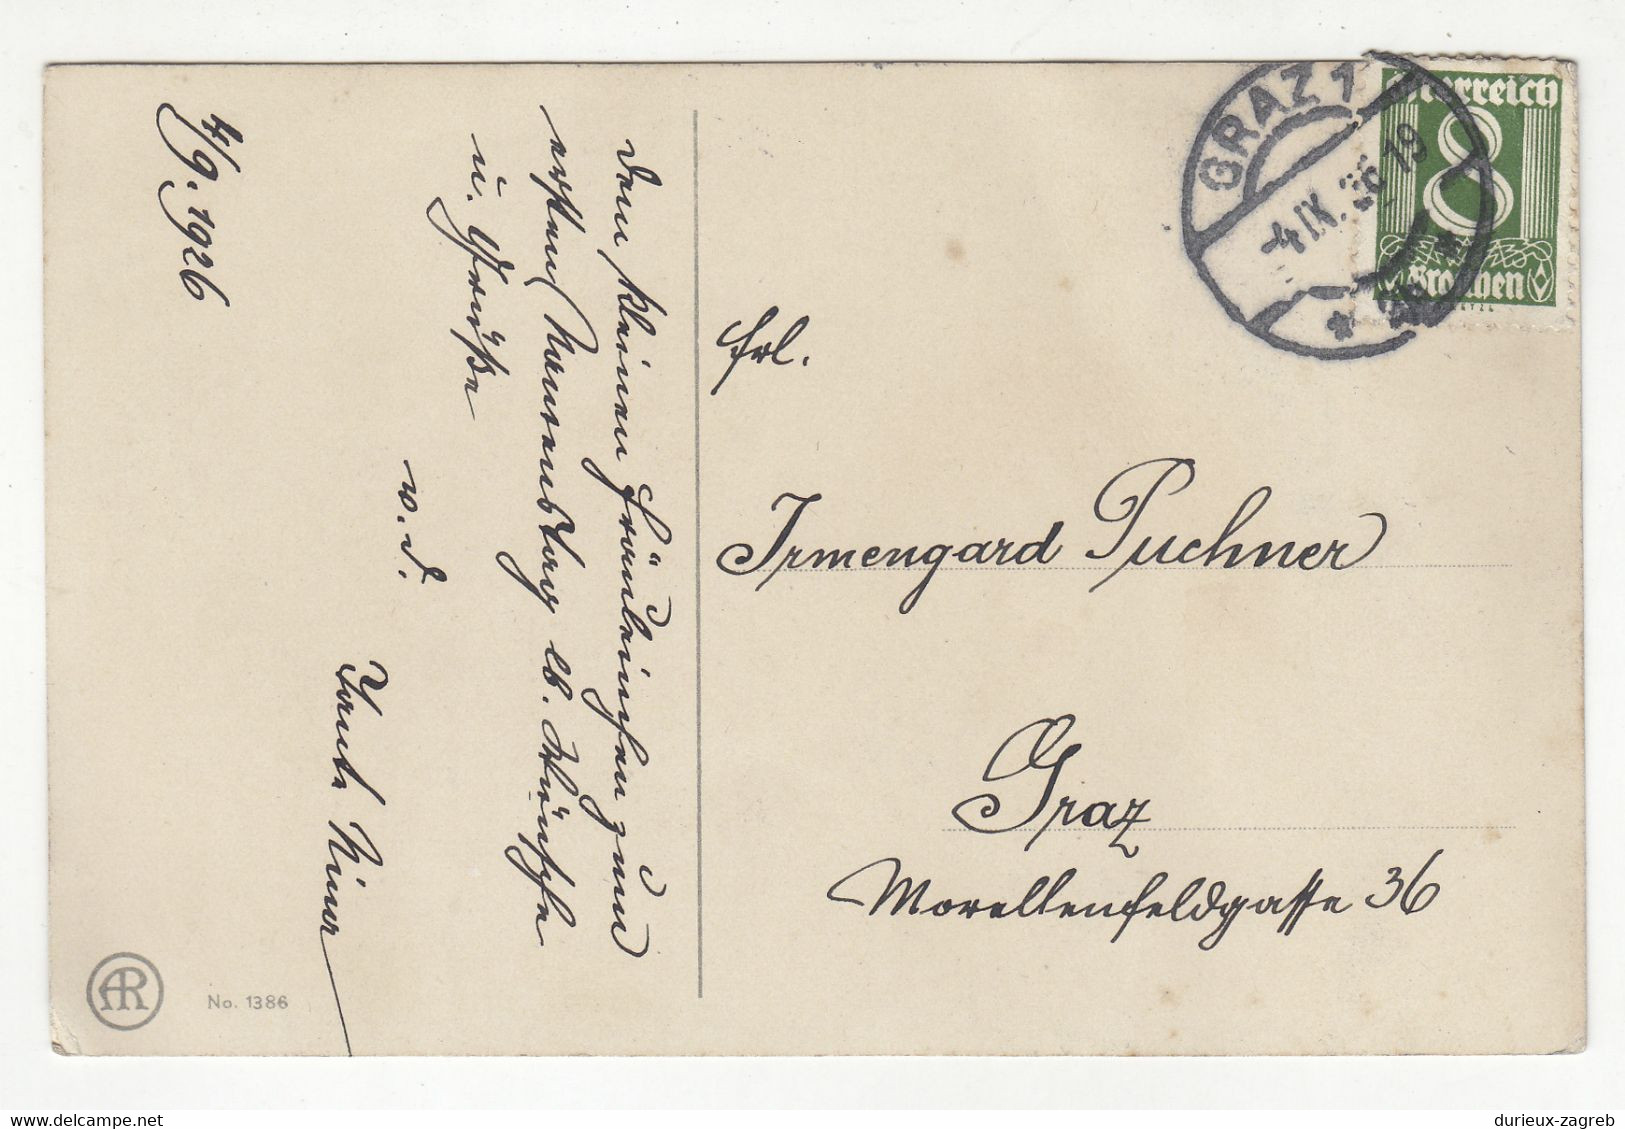 W. Fialkowska: Baby's Head Old Postcard Posted 1936 Austria B220310 - Fialkowska, Wally